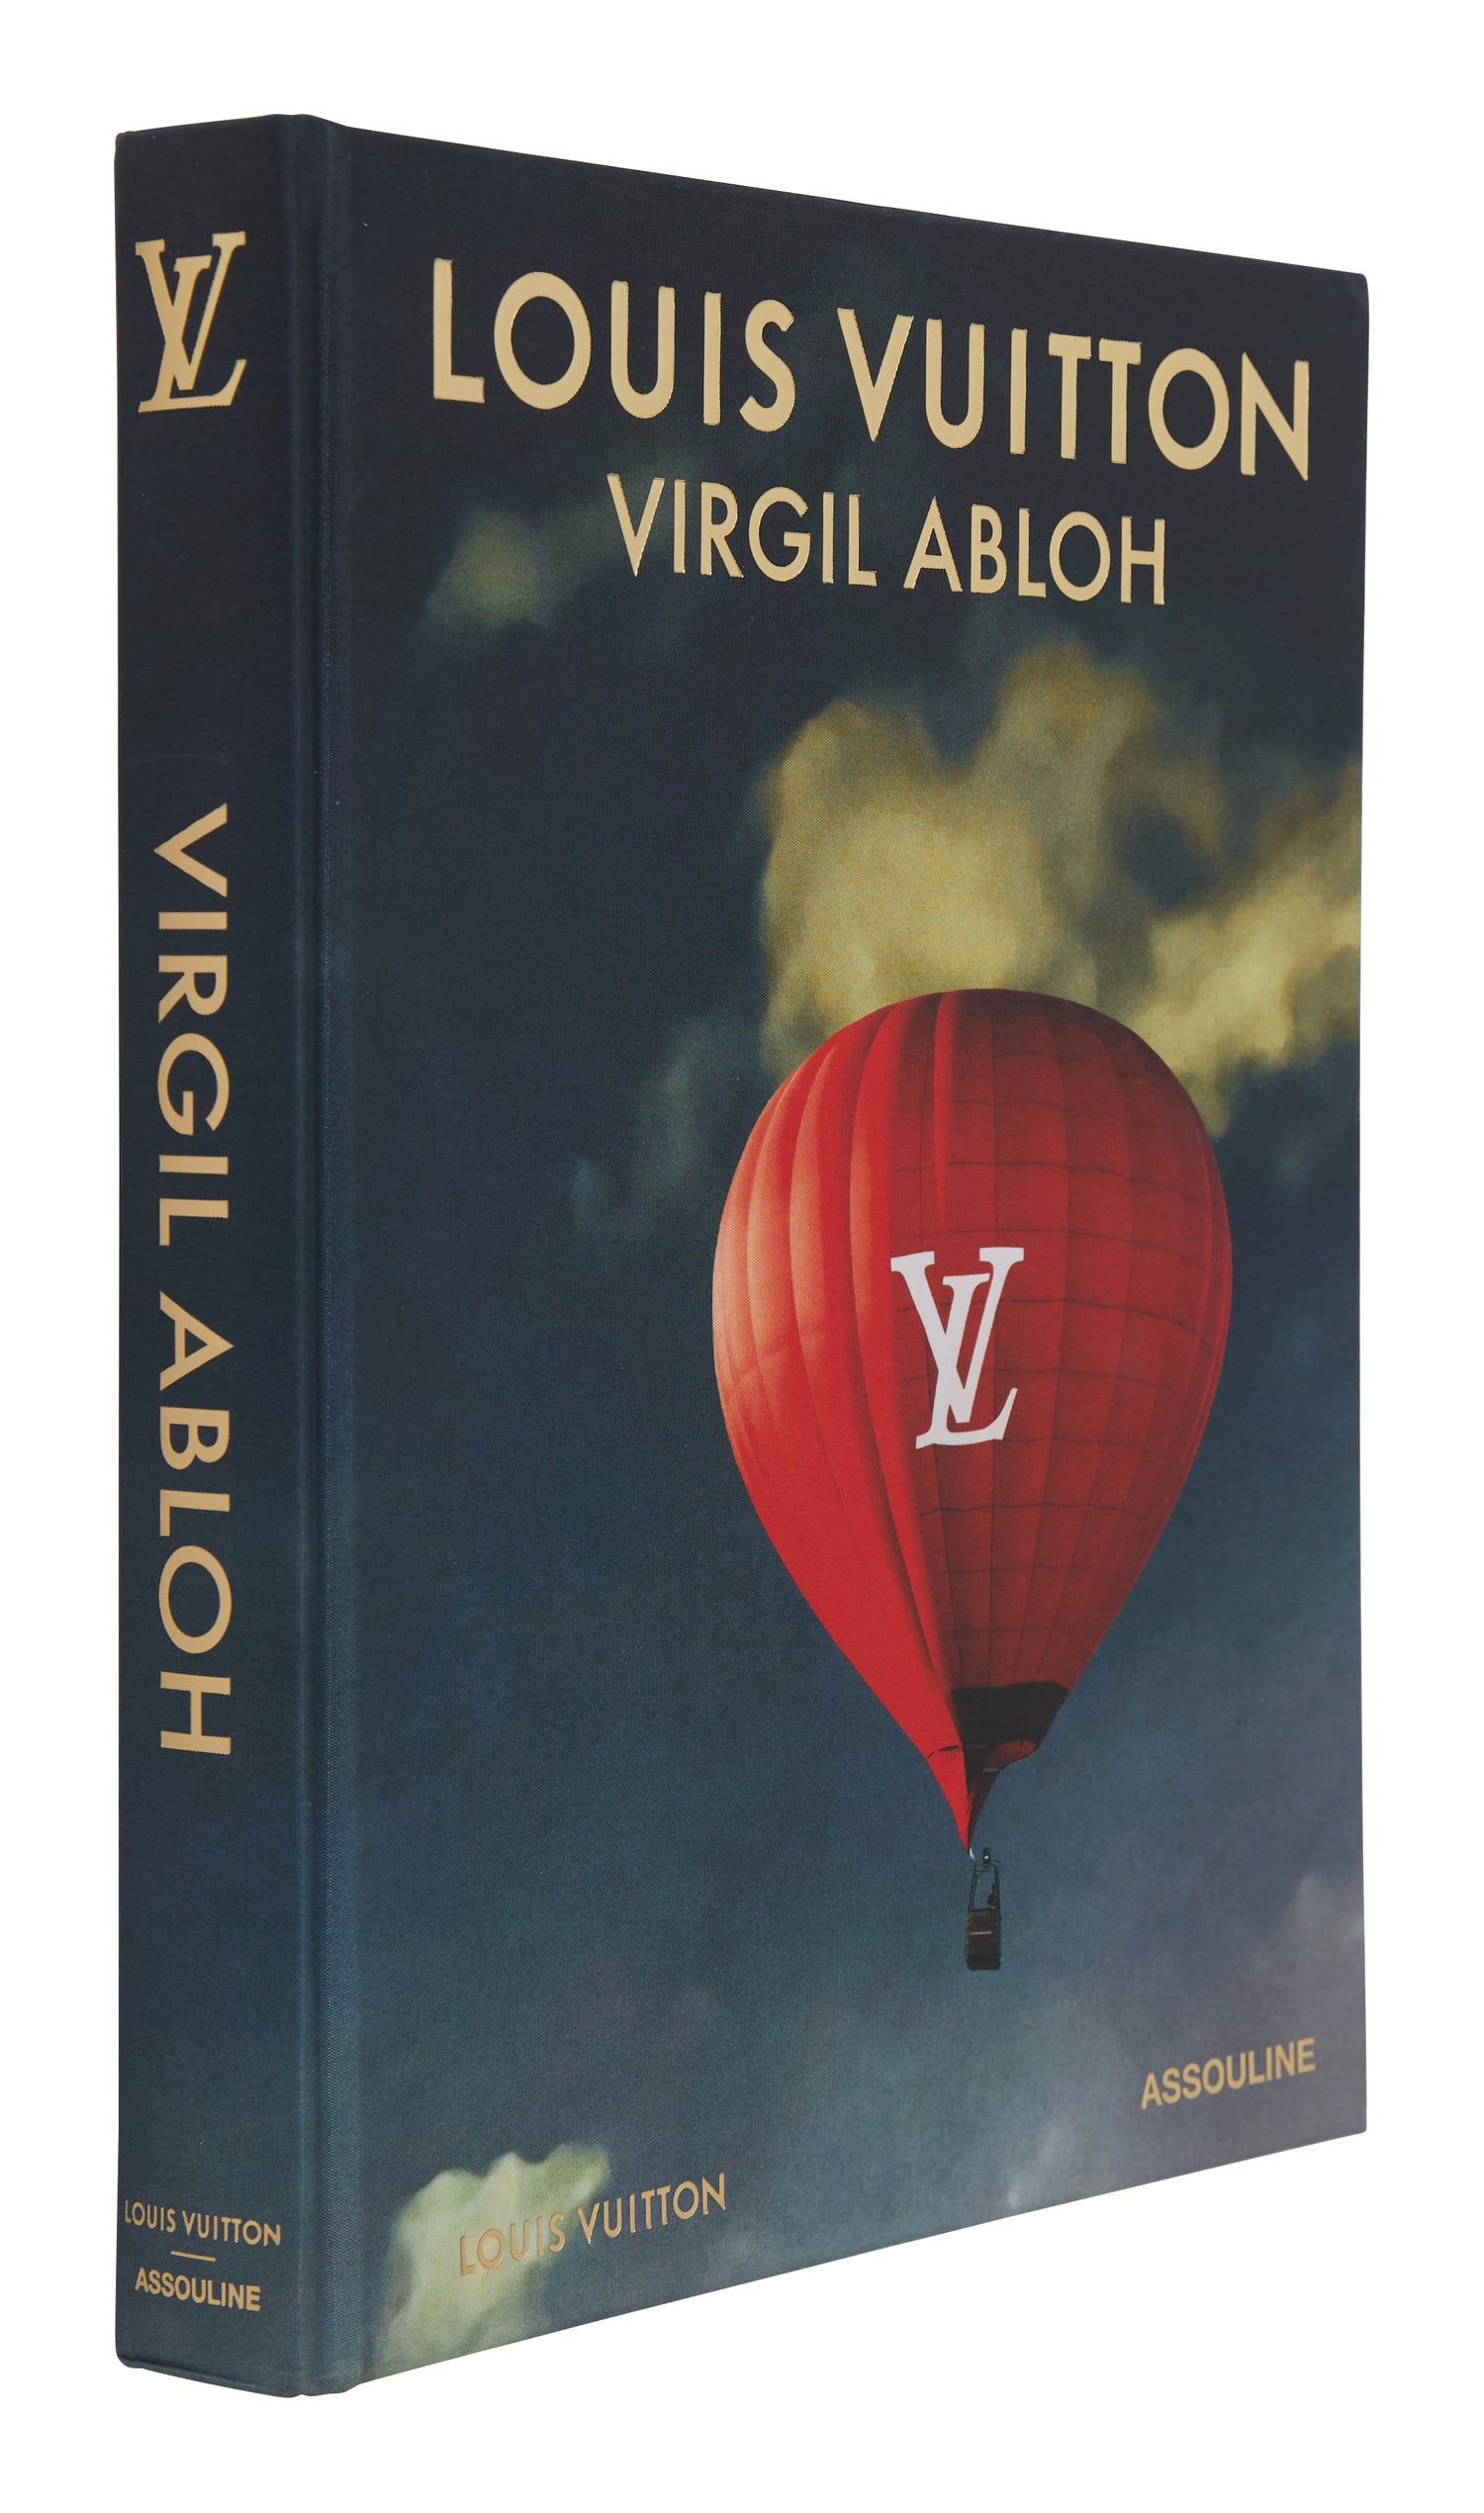 Here's a look at the Virgil Abloh X Nigo Louis Vuitton capsule